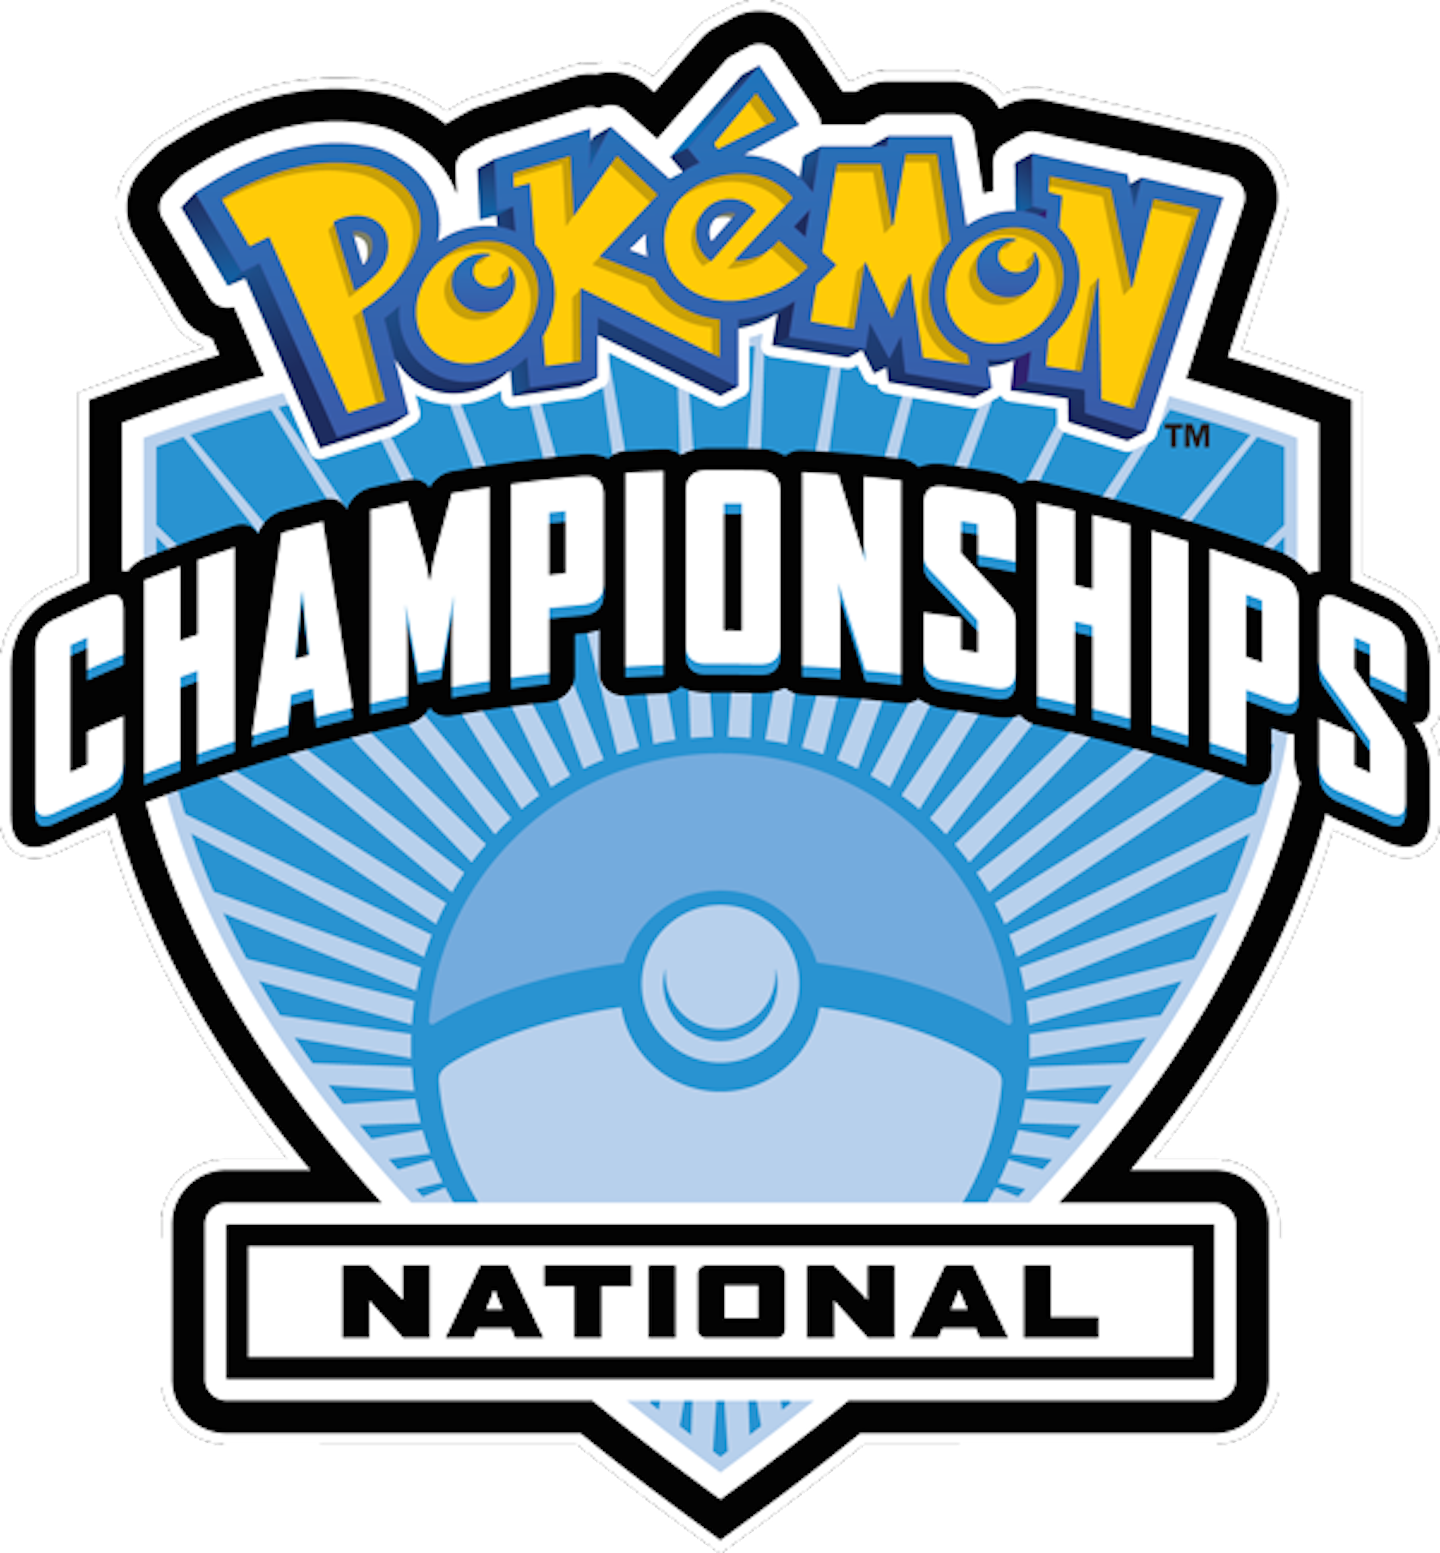 Pokémon US Championships Will be Broadcast on Twitch.tv